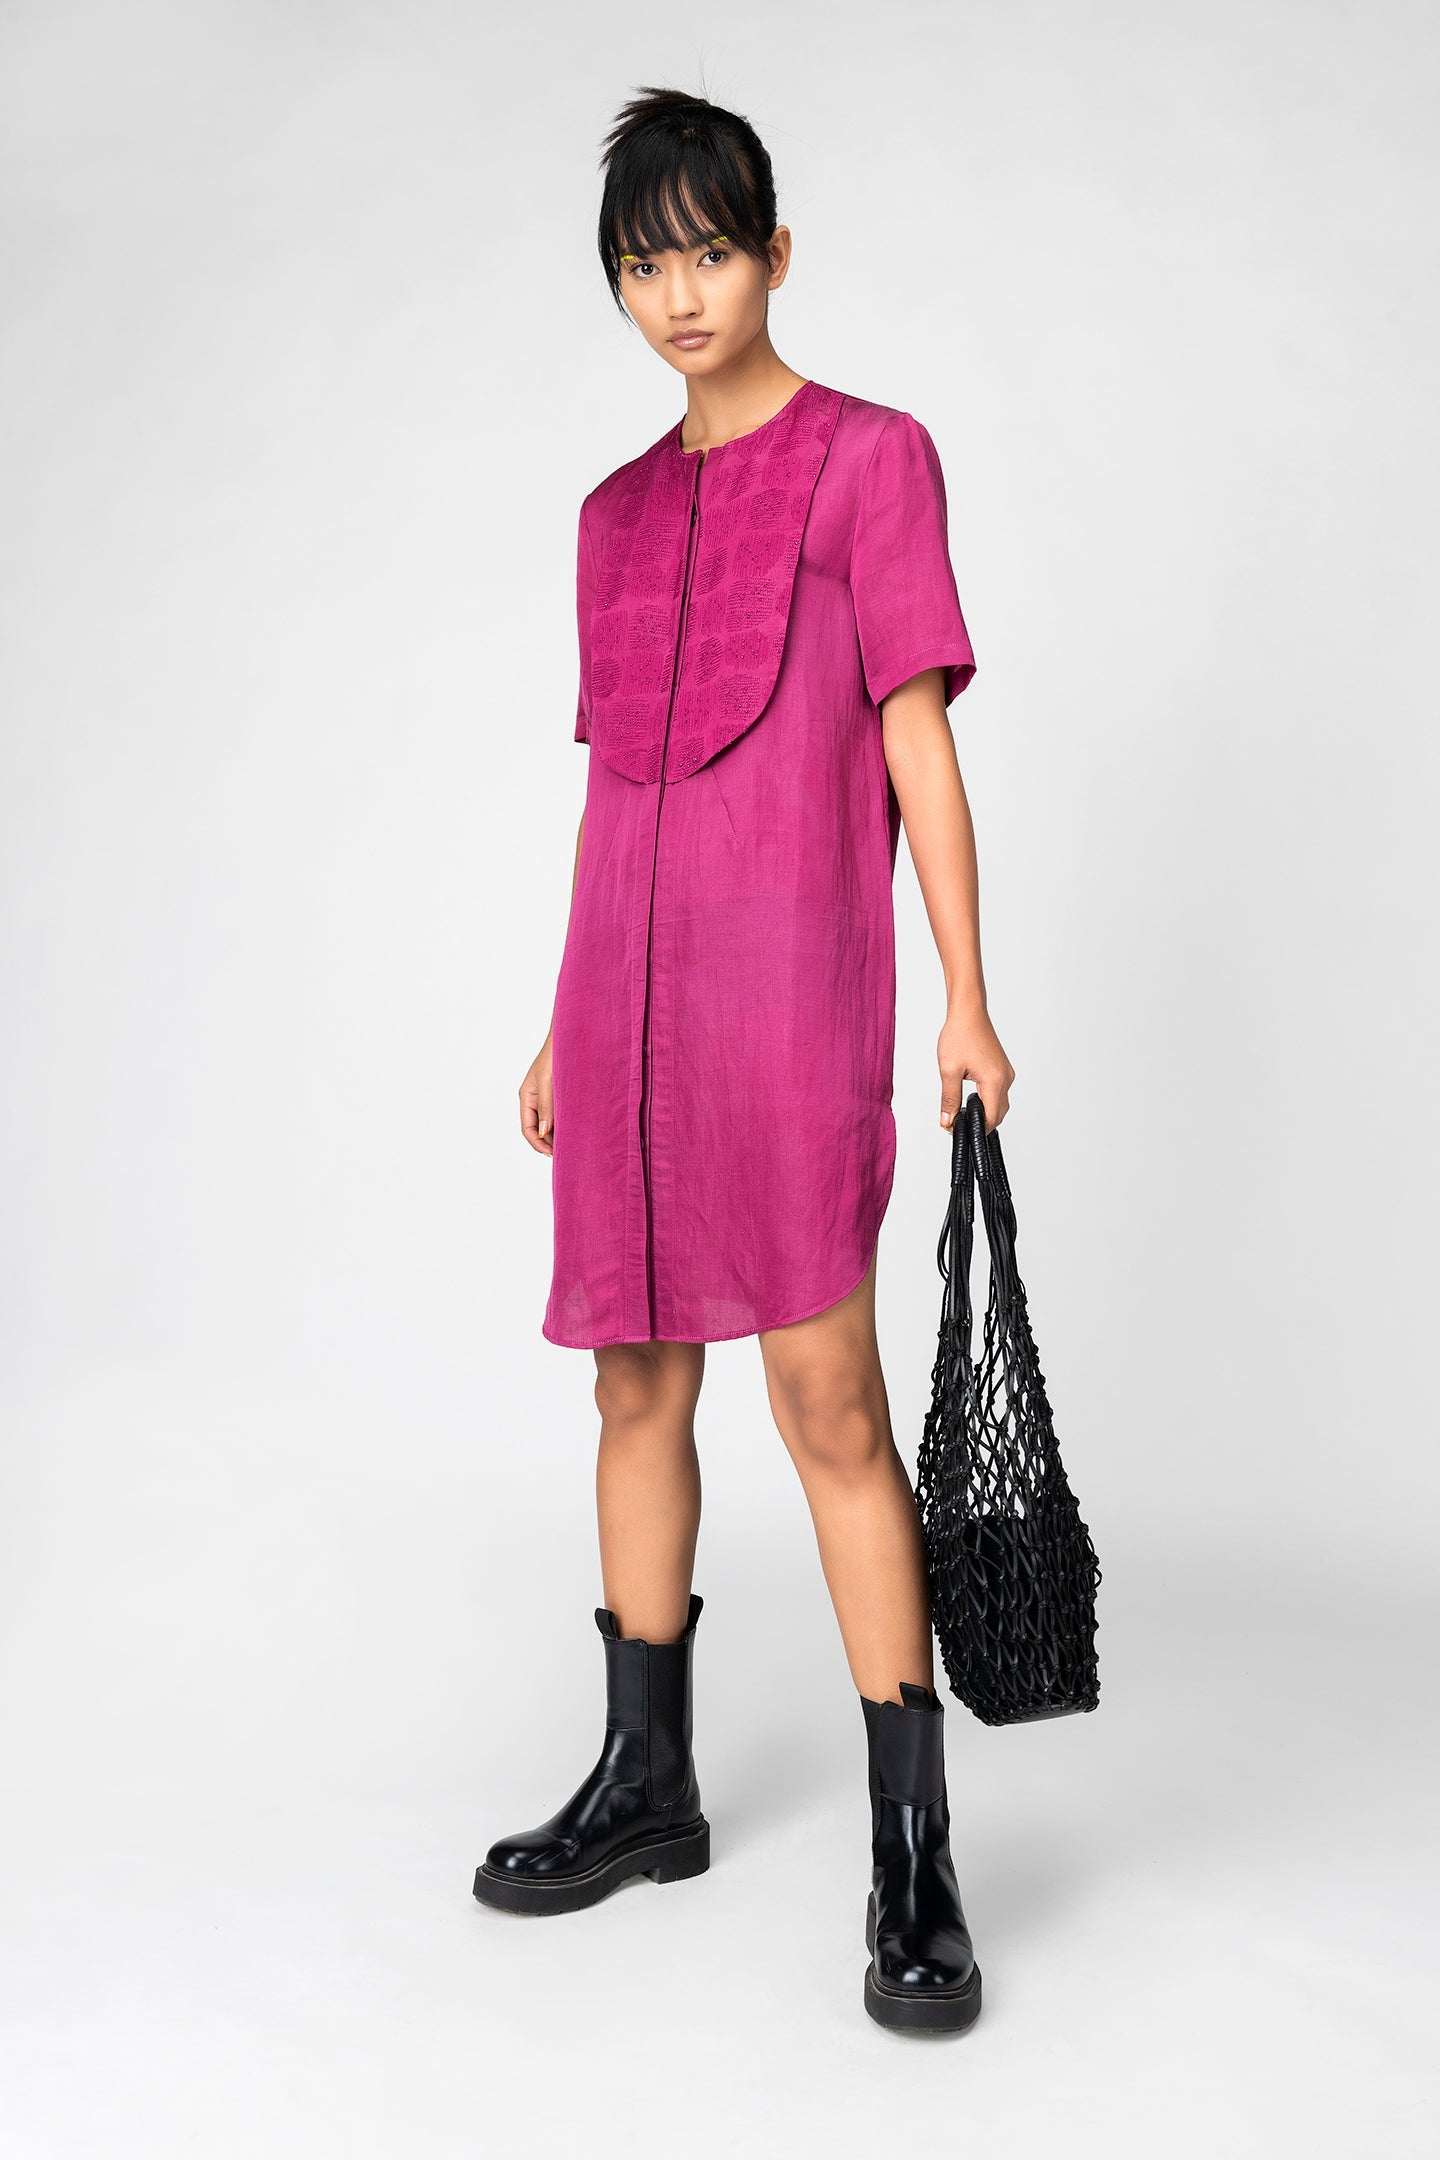 embroidered-yoke-dress - Genes online store 2020